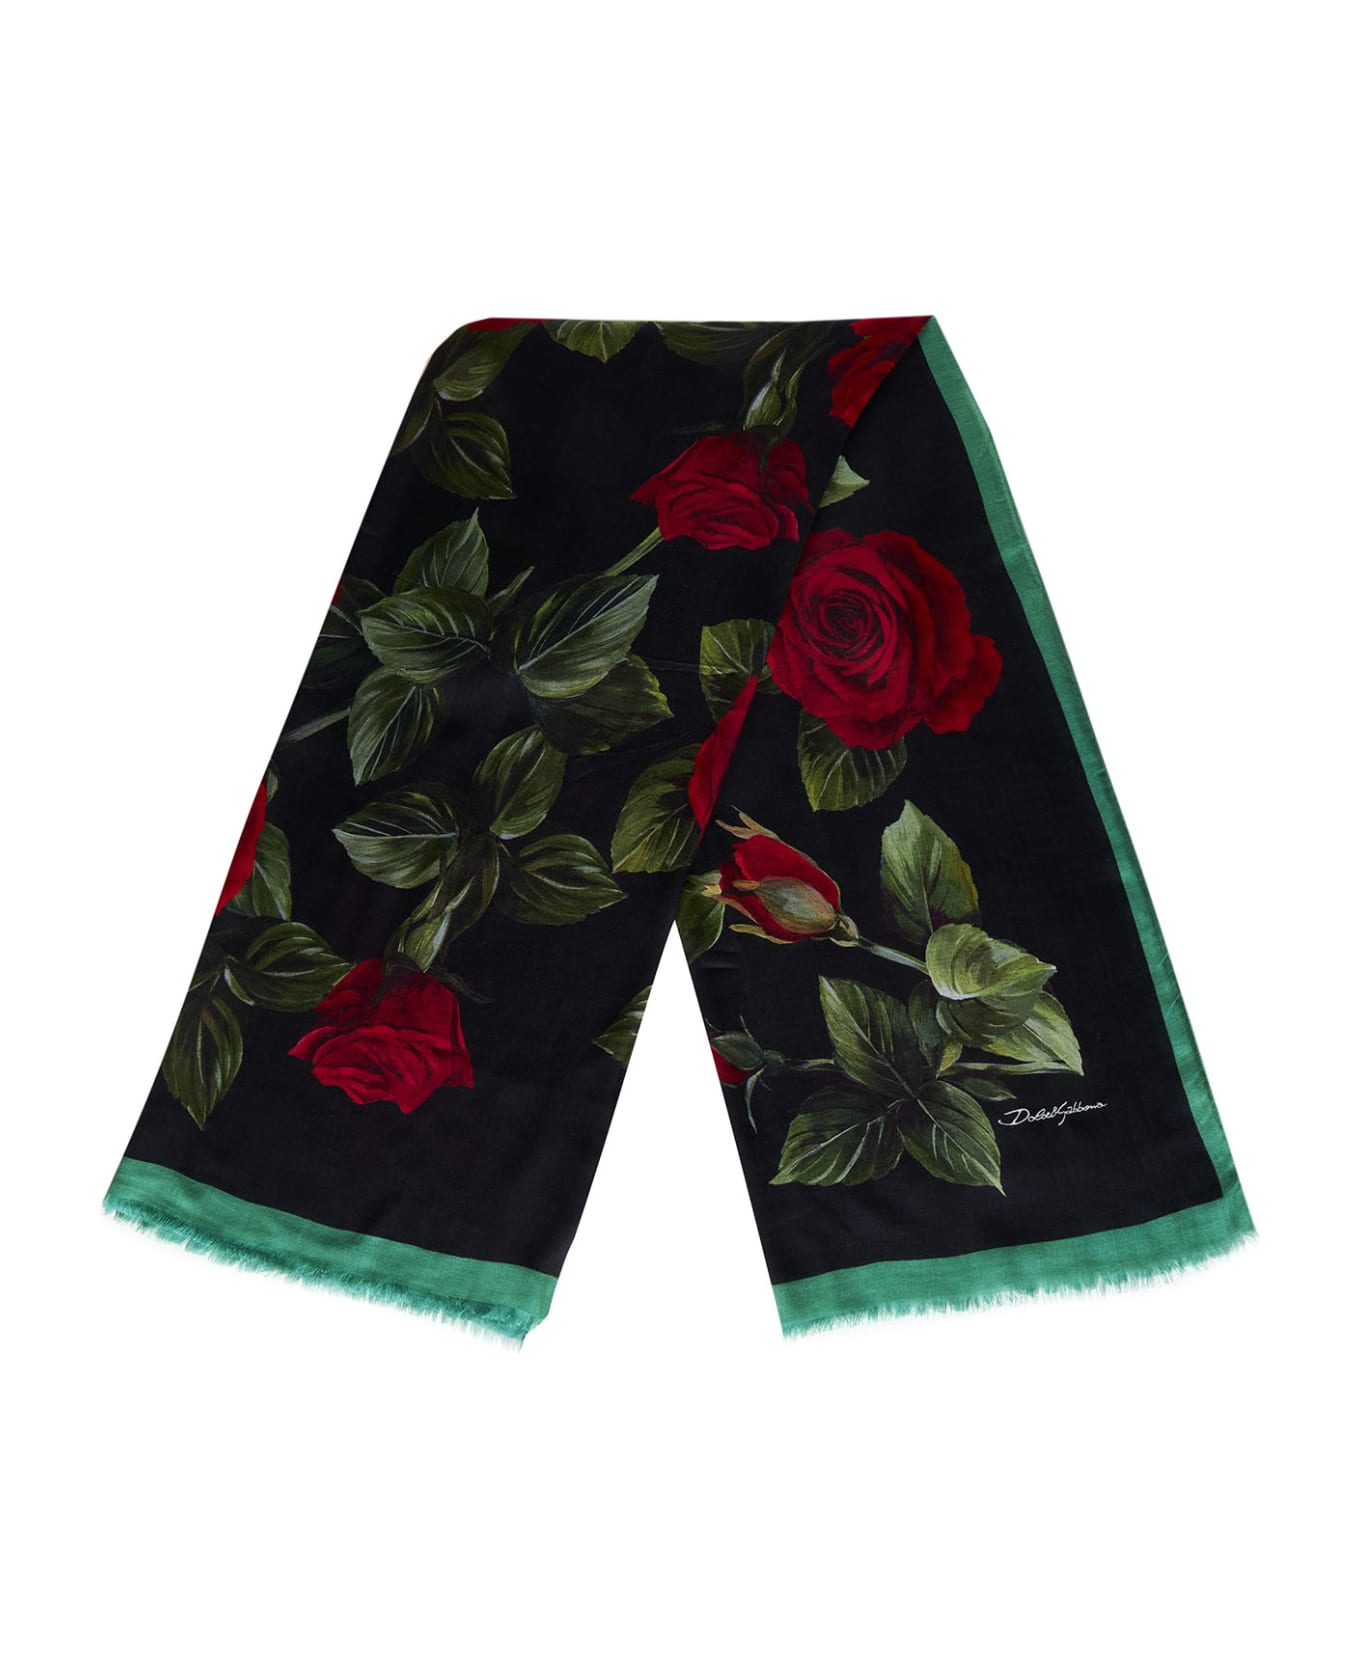 Dolce & Gabbana Scarf - Rose rosse fdo nero